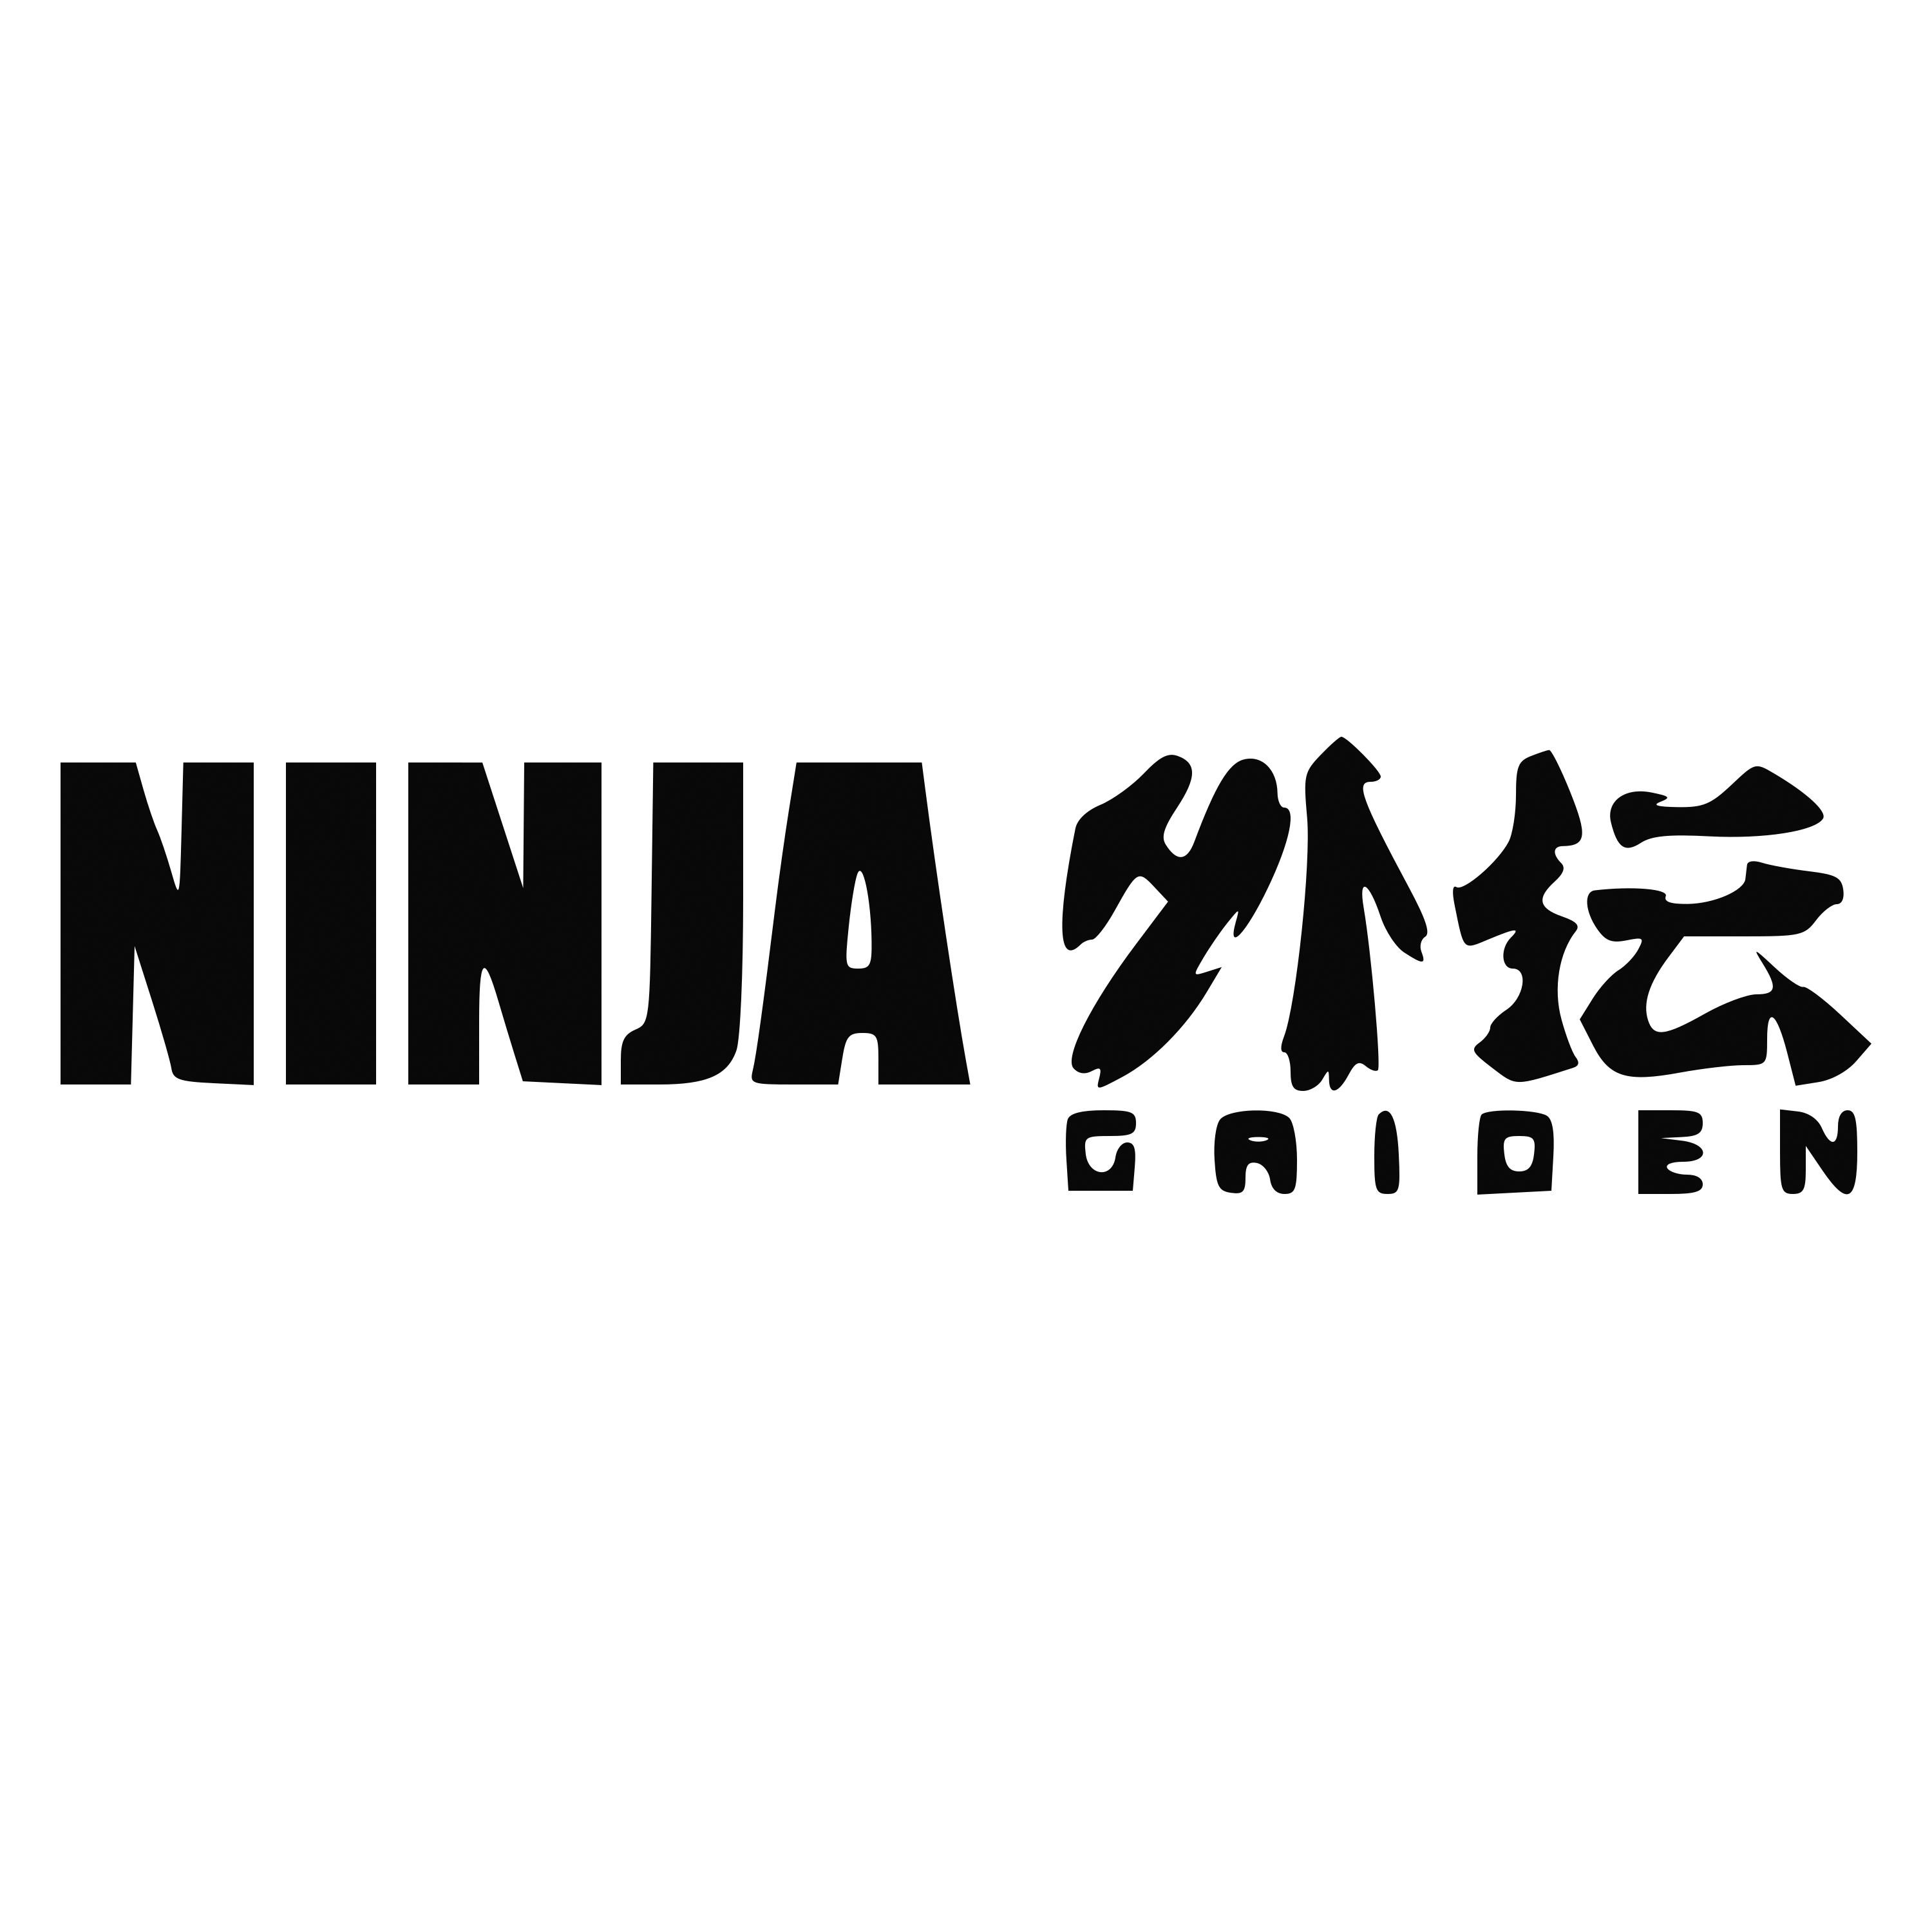 Ninja Gaiden Logo  Transparent Image